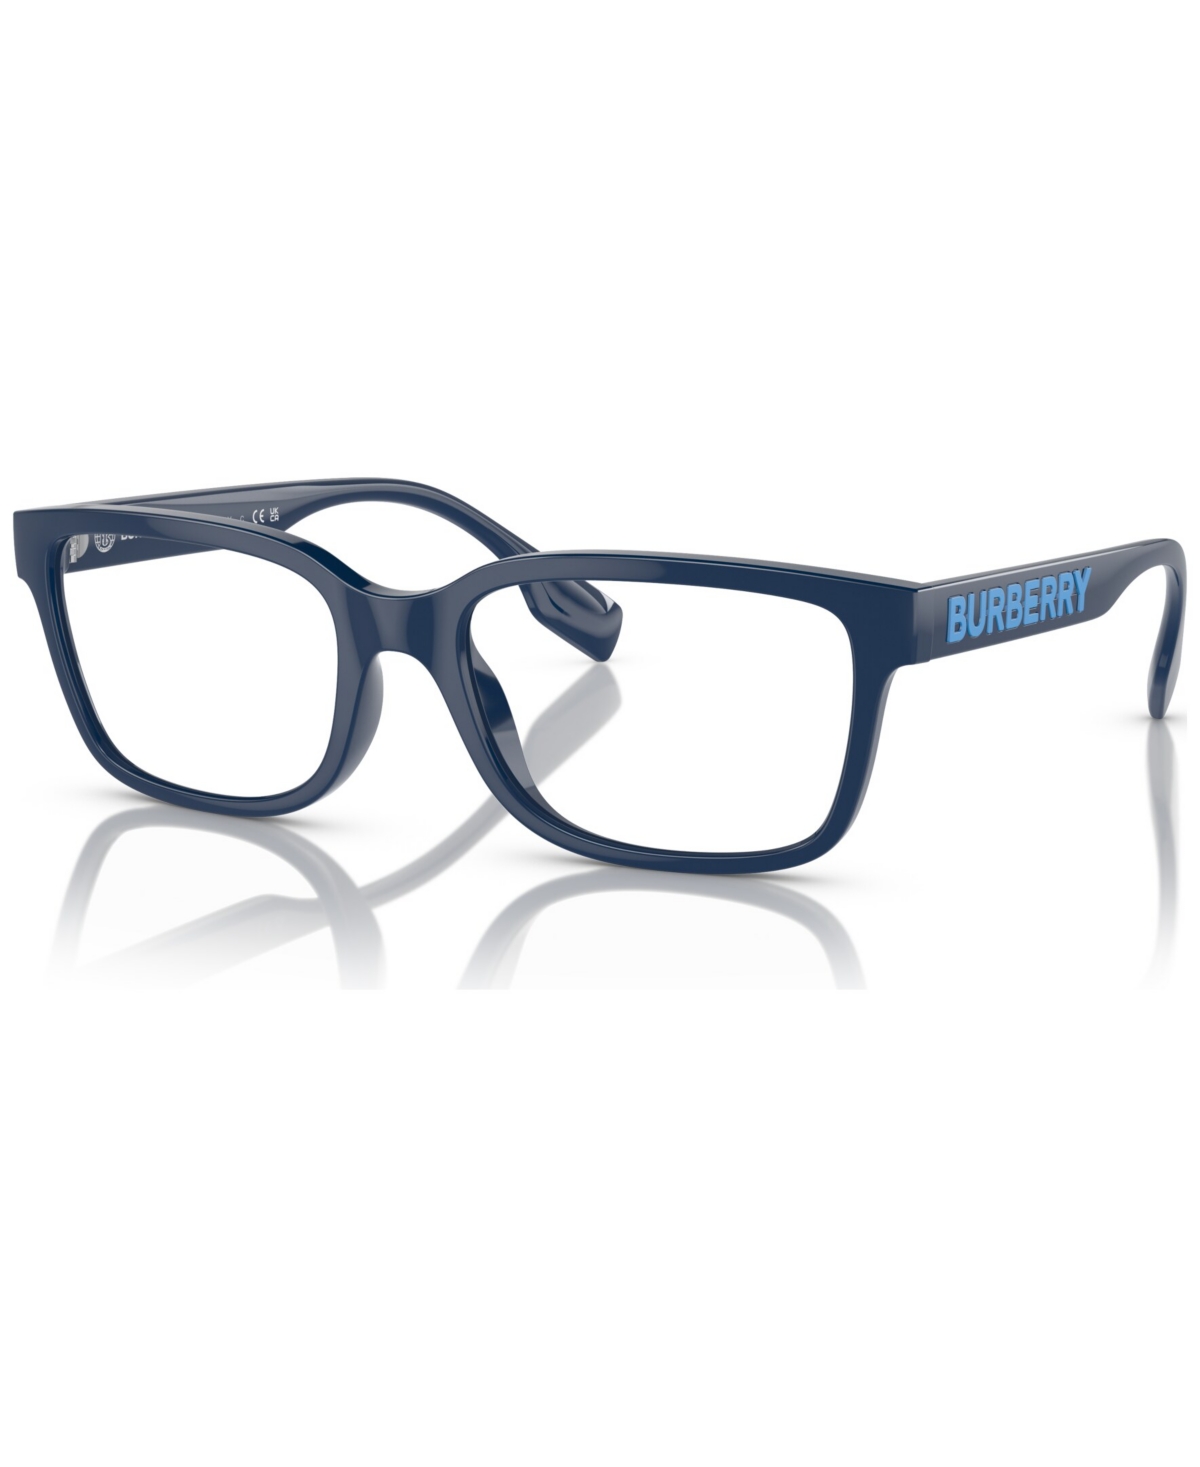 Men's Square Eyeglasses, BE2379U 55 - Blue